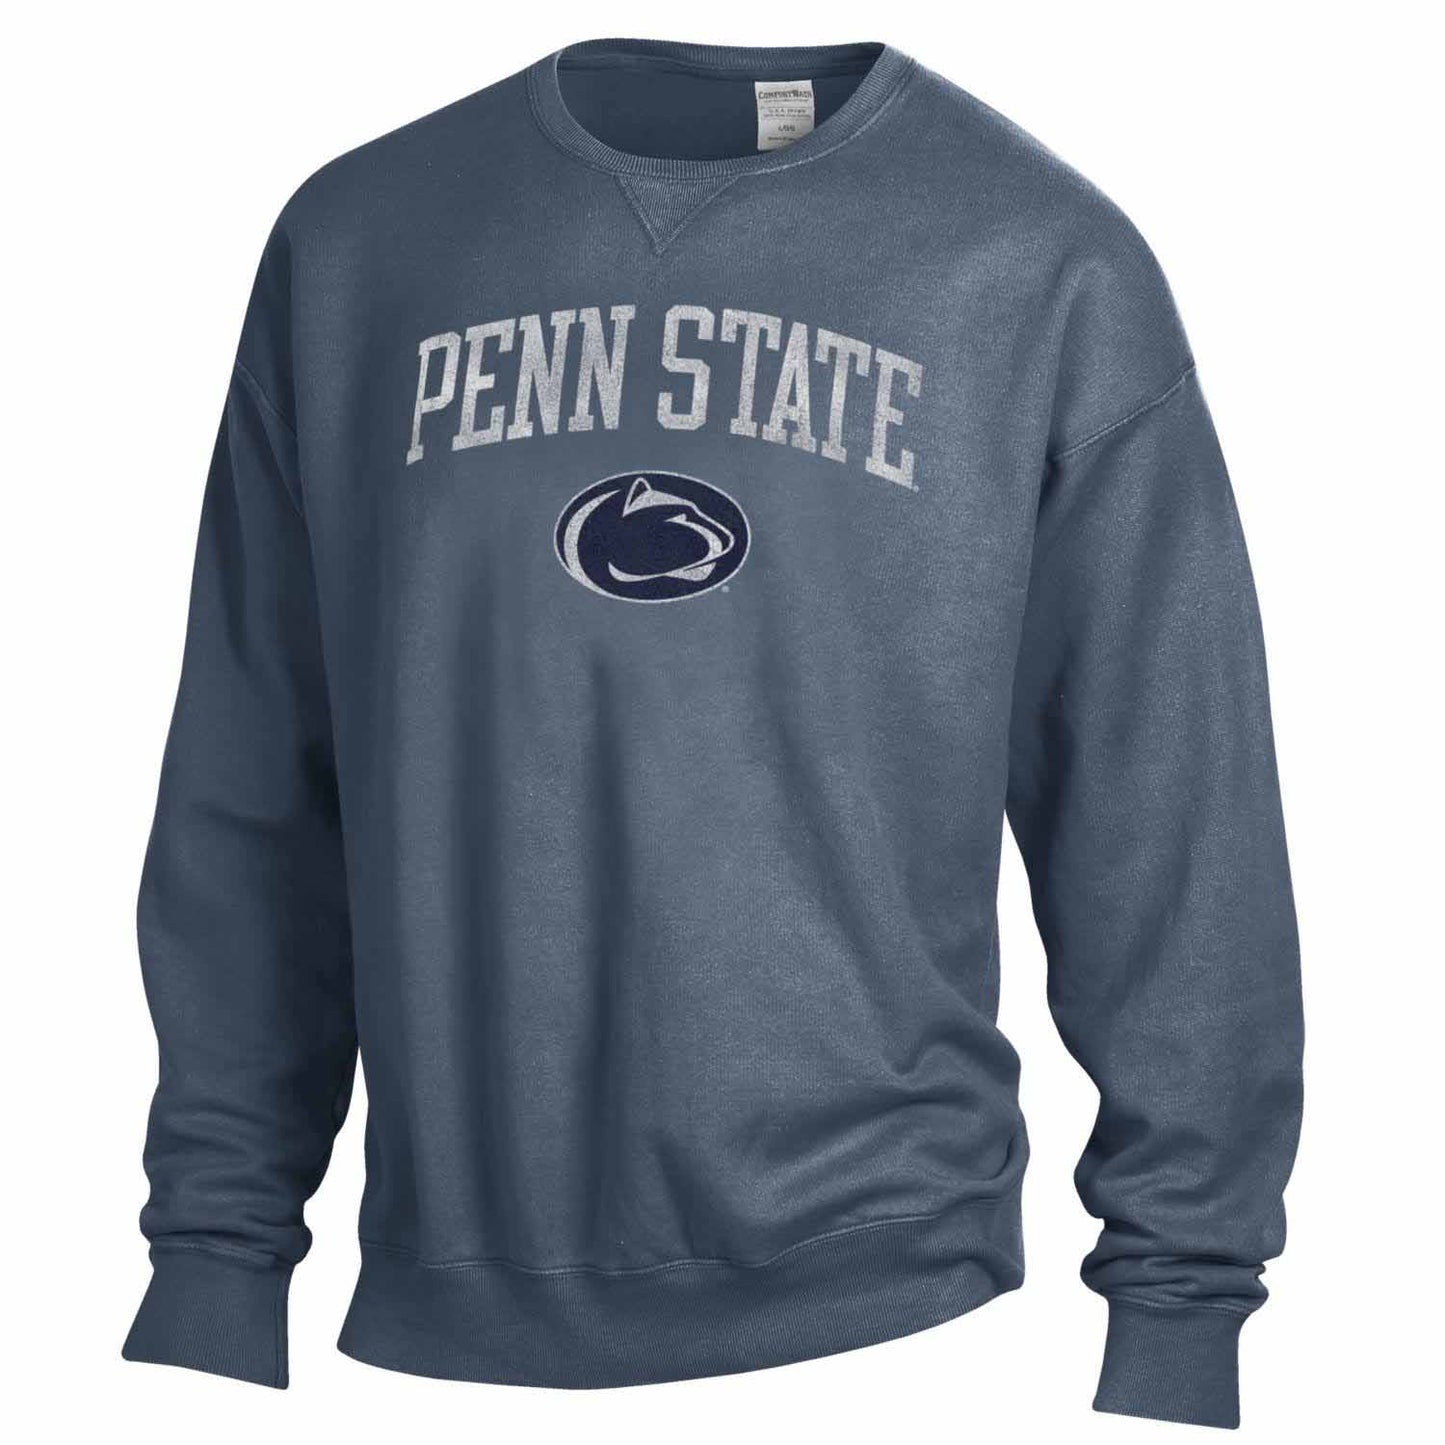 Penn State Nittany Lions Adult Ultra Soft Comfort Wash Crewneck Sweatshirt - Team Color